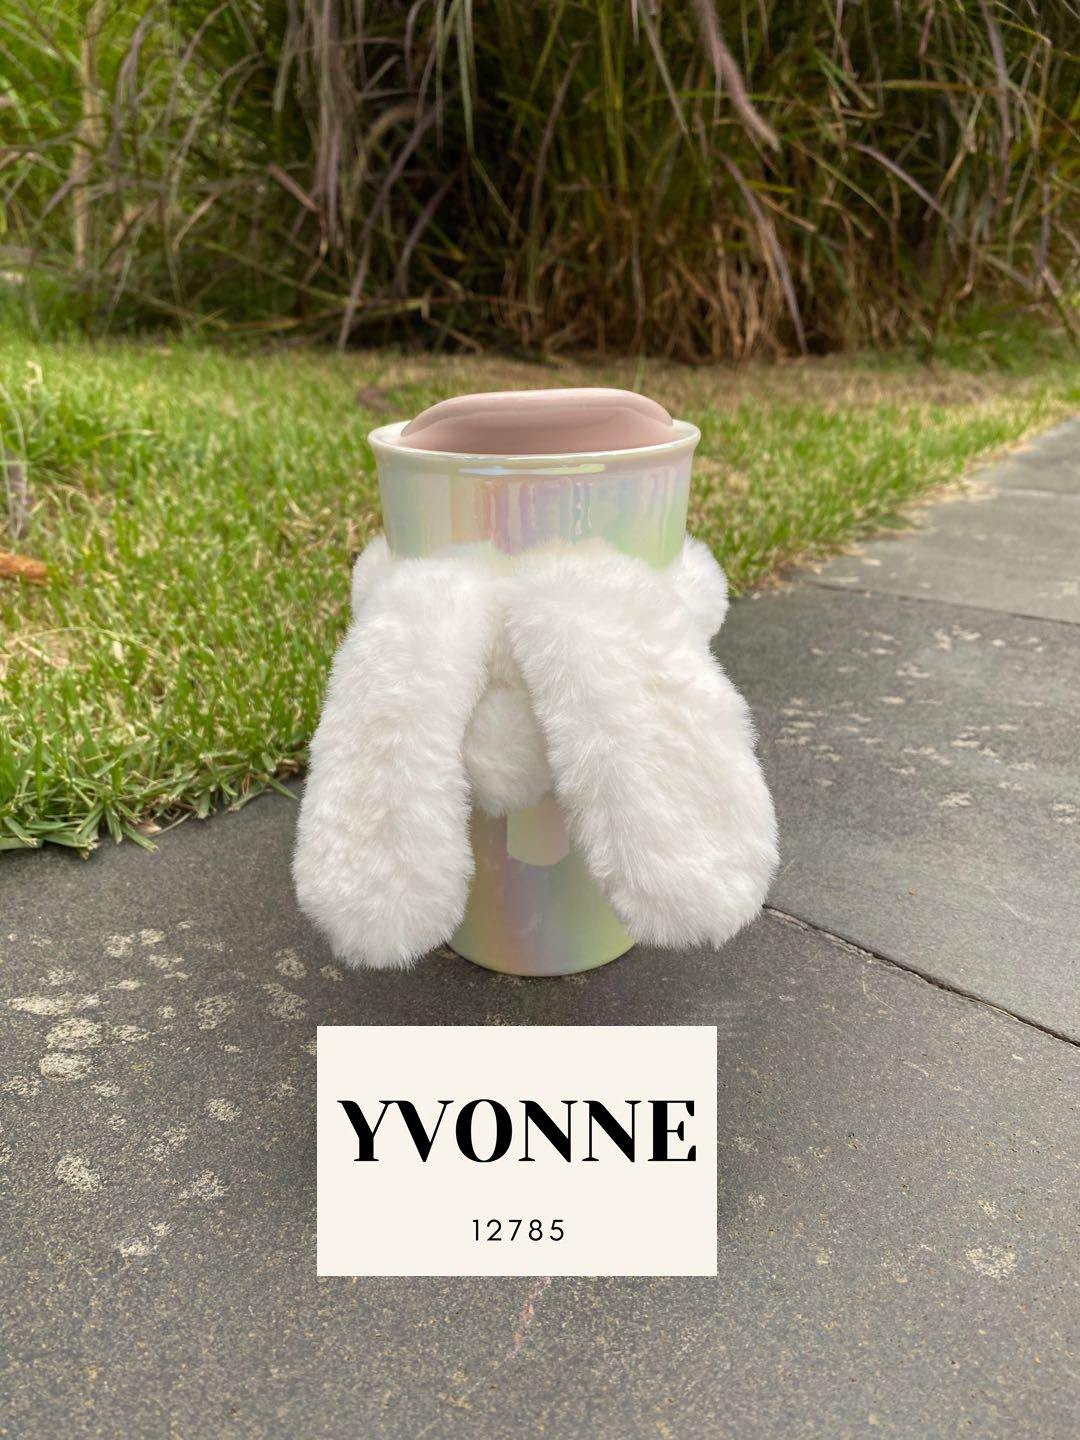 Starbucks Cup 2019 Mid-Autumn Festival Fluffy Bunny Ears Double Layer Ceramic Mug Drinking Cup 12oz - Yvonne12785